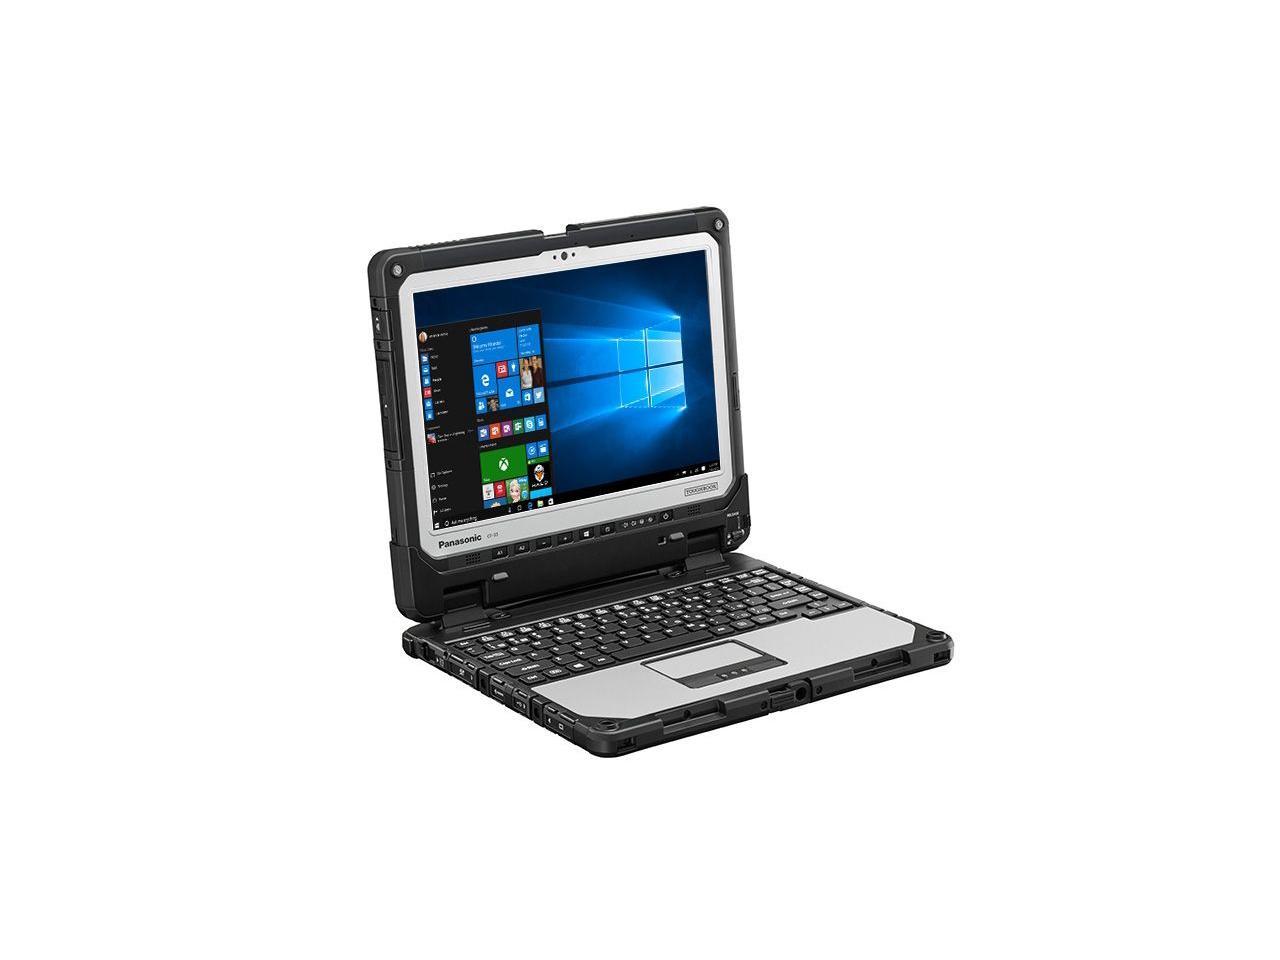 Panasonic Toughbook CF-33, Rugged Detachable Laptop (2 in 1), 4G LTE, Intel i5 6300U @ 2.40GHz, 12